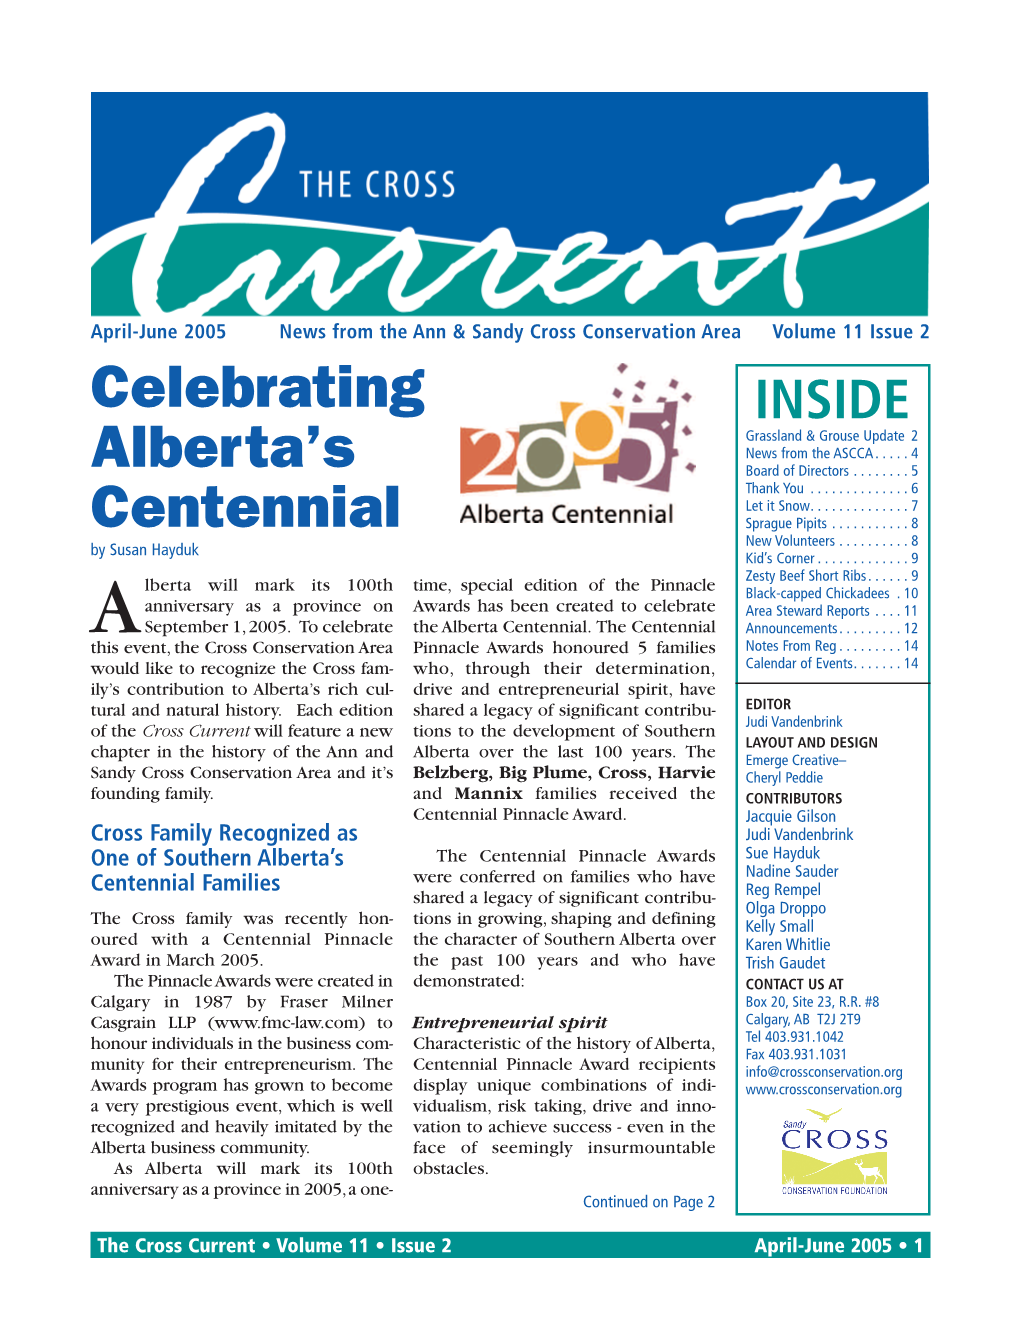 Celebrating Alberta's Centennial